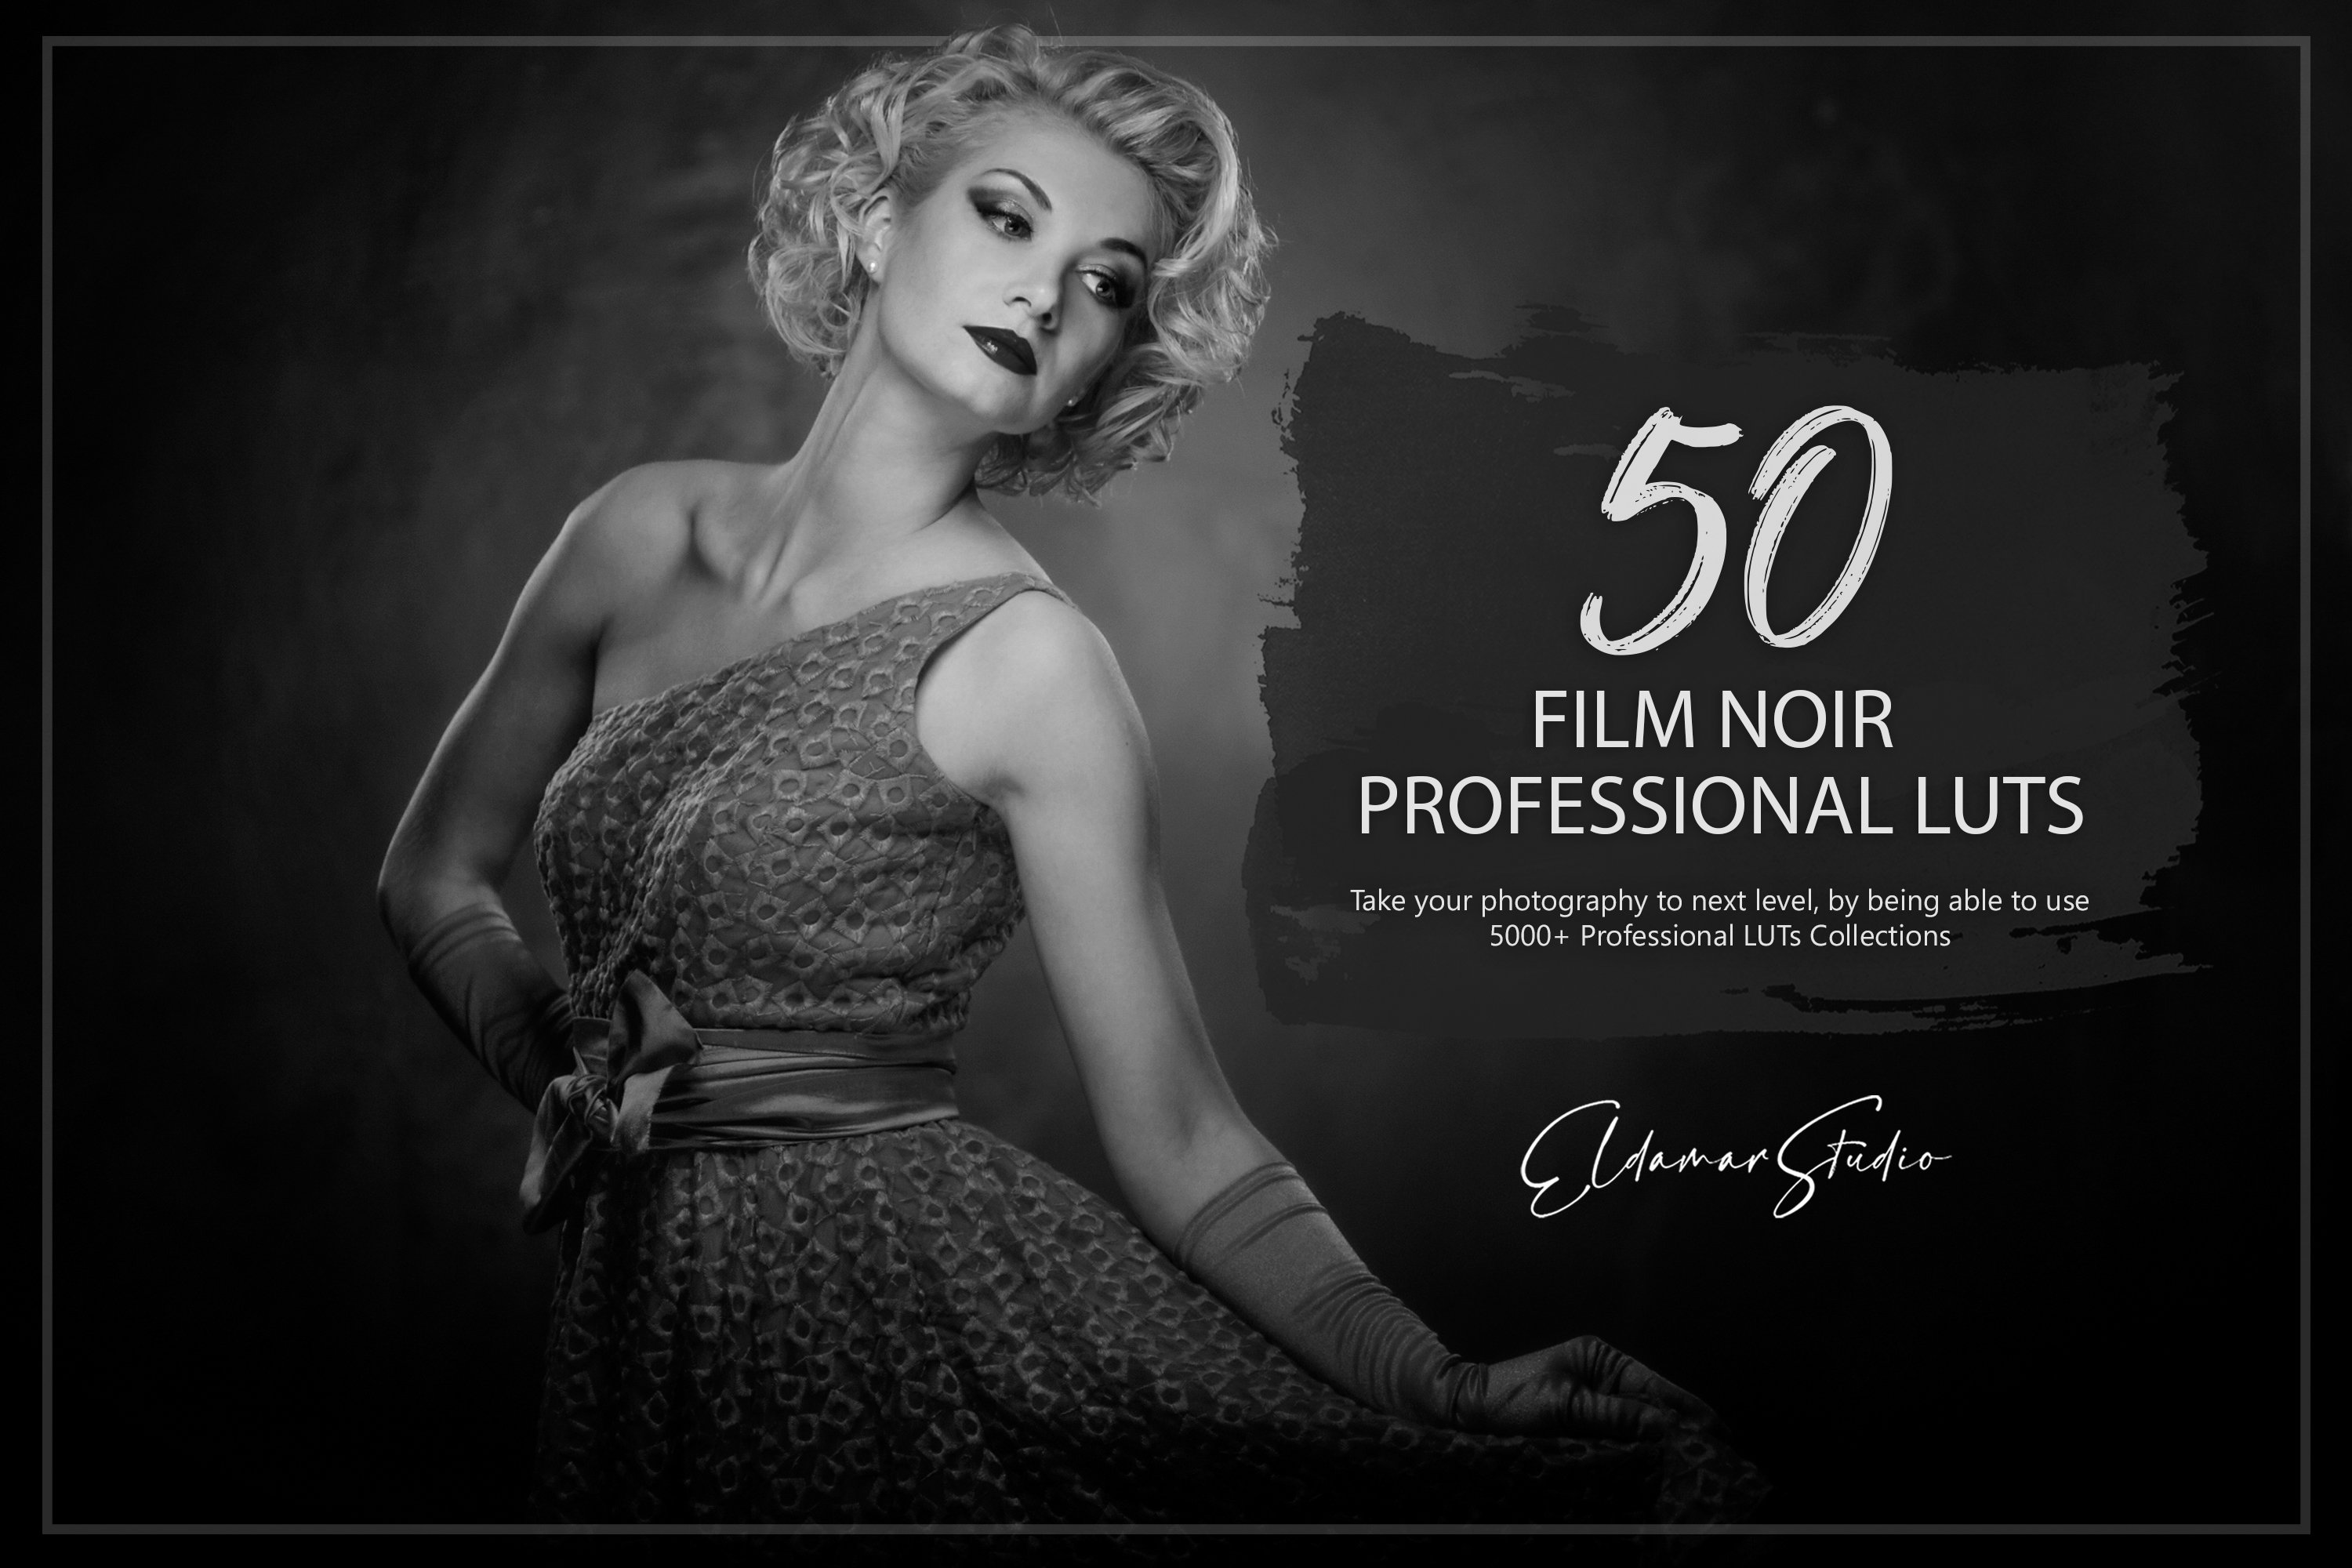 50 Film Noir LUTs Packcover image.